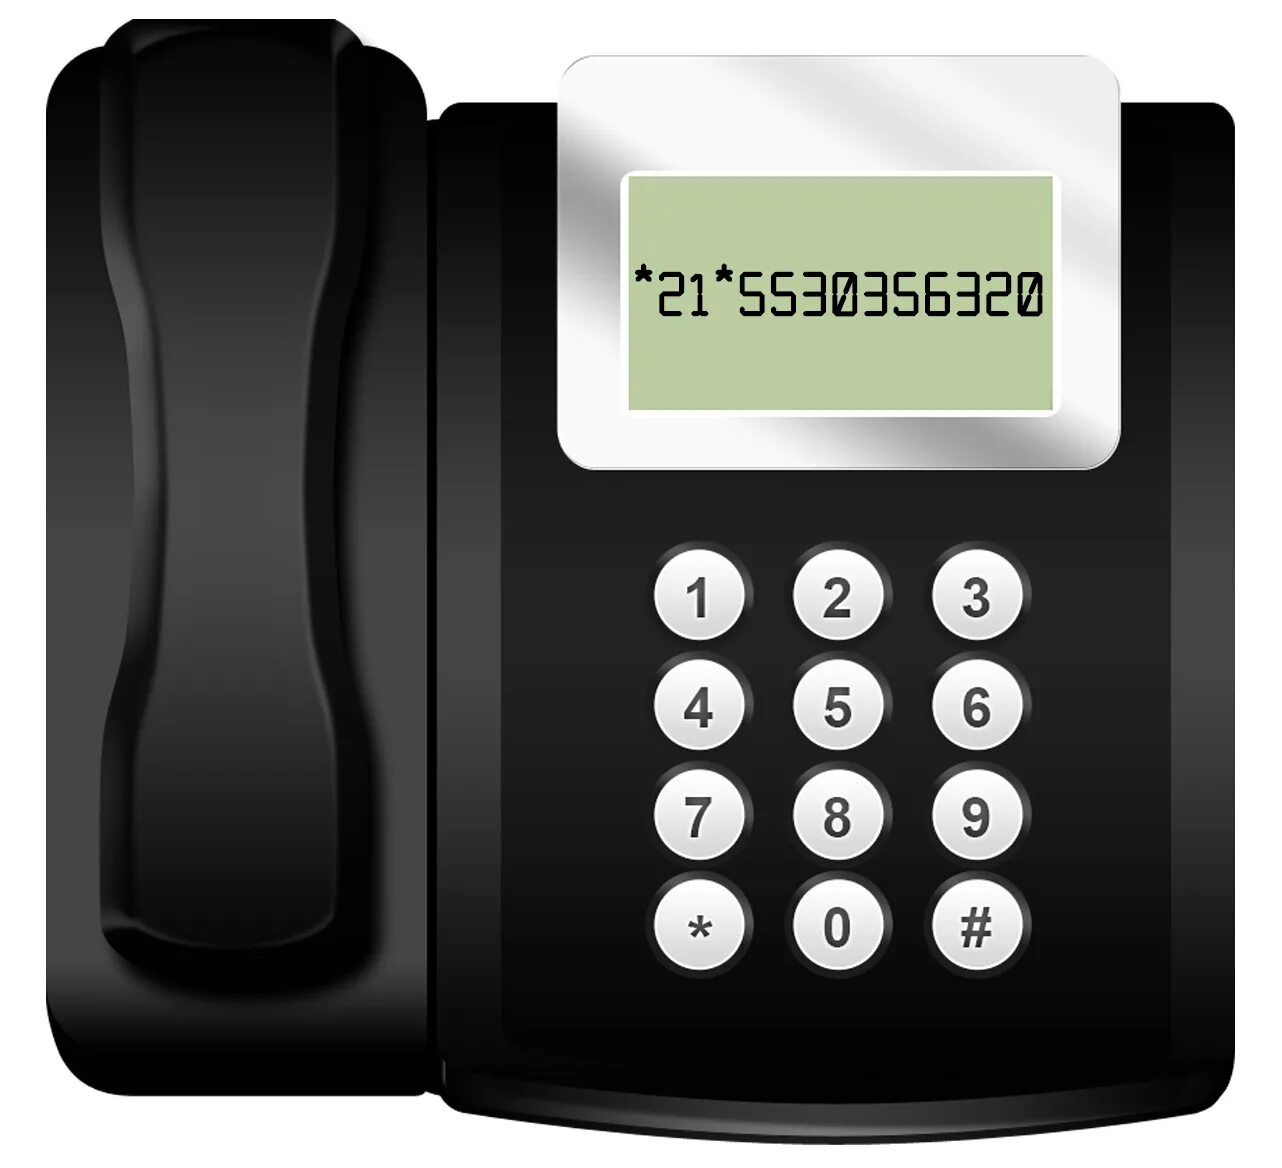 Телефон спак. Стационарный телефон. IP телефония значок. Значок стационарного телефона. VOIP телефон.